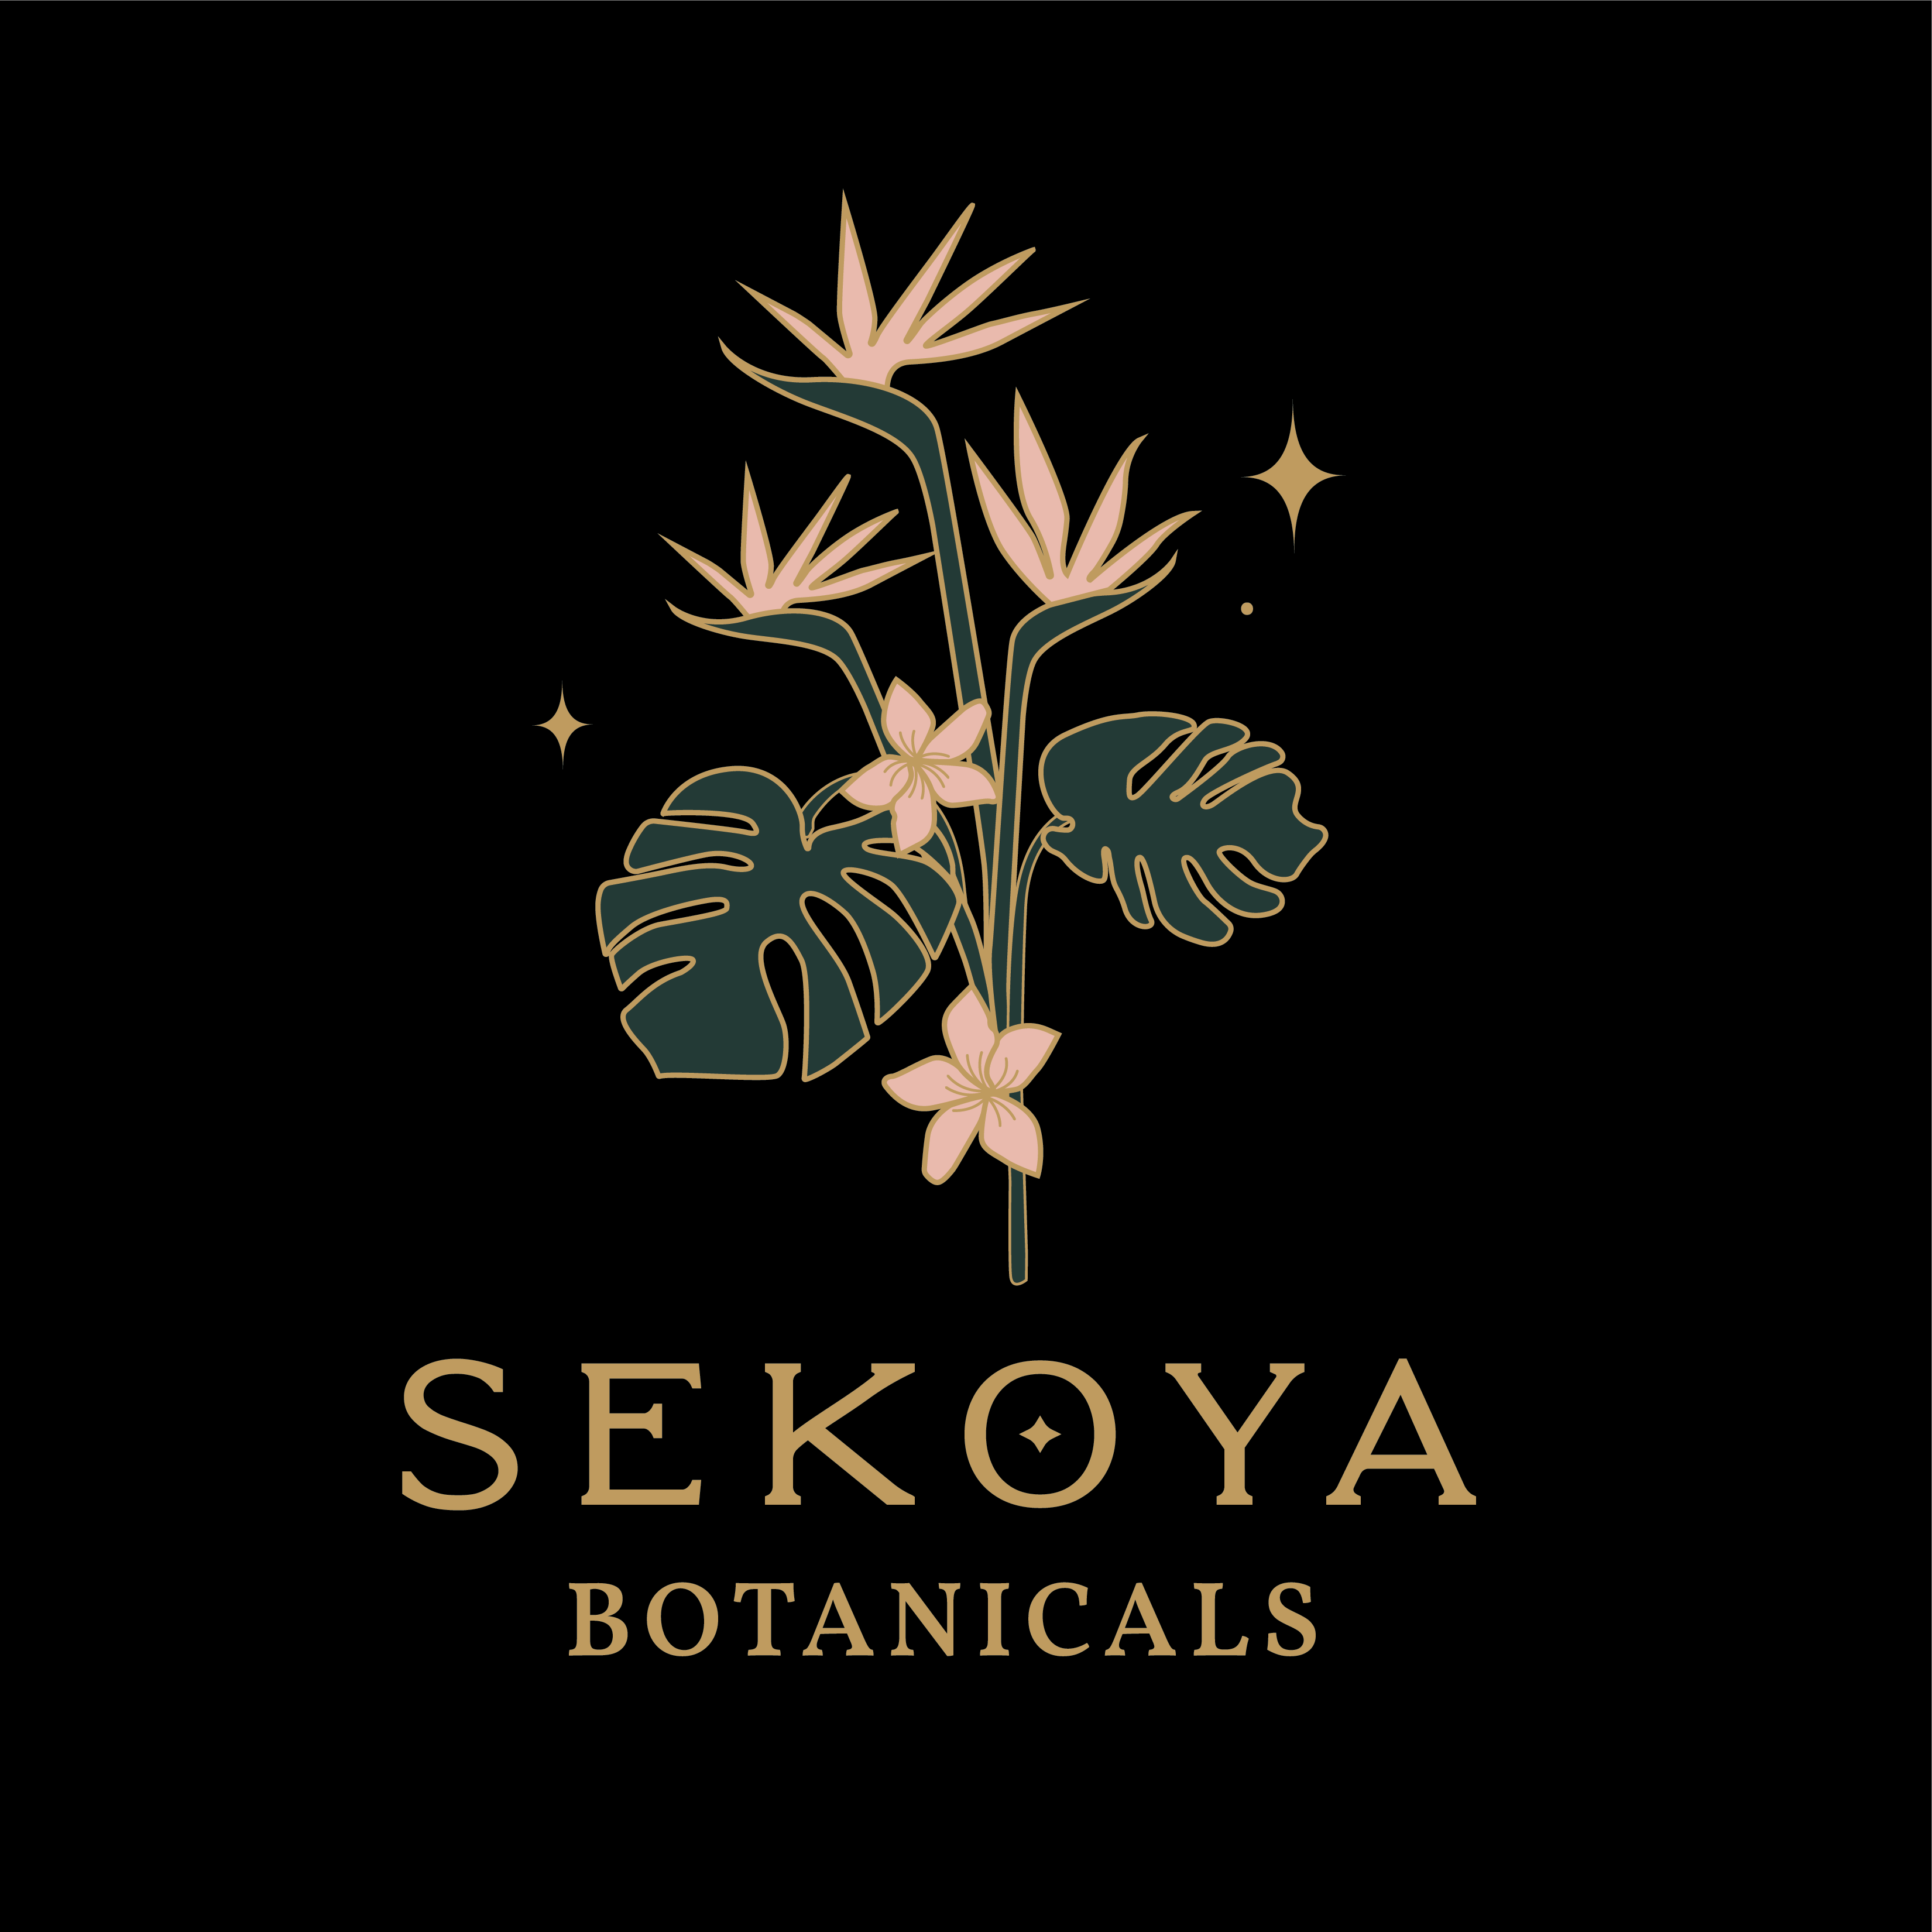 Sekoya Botanicals logo design by logo designer Daphna Sebbane for your inspiration and for the worlds largest logo competition